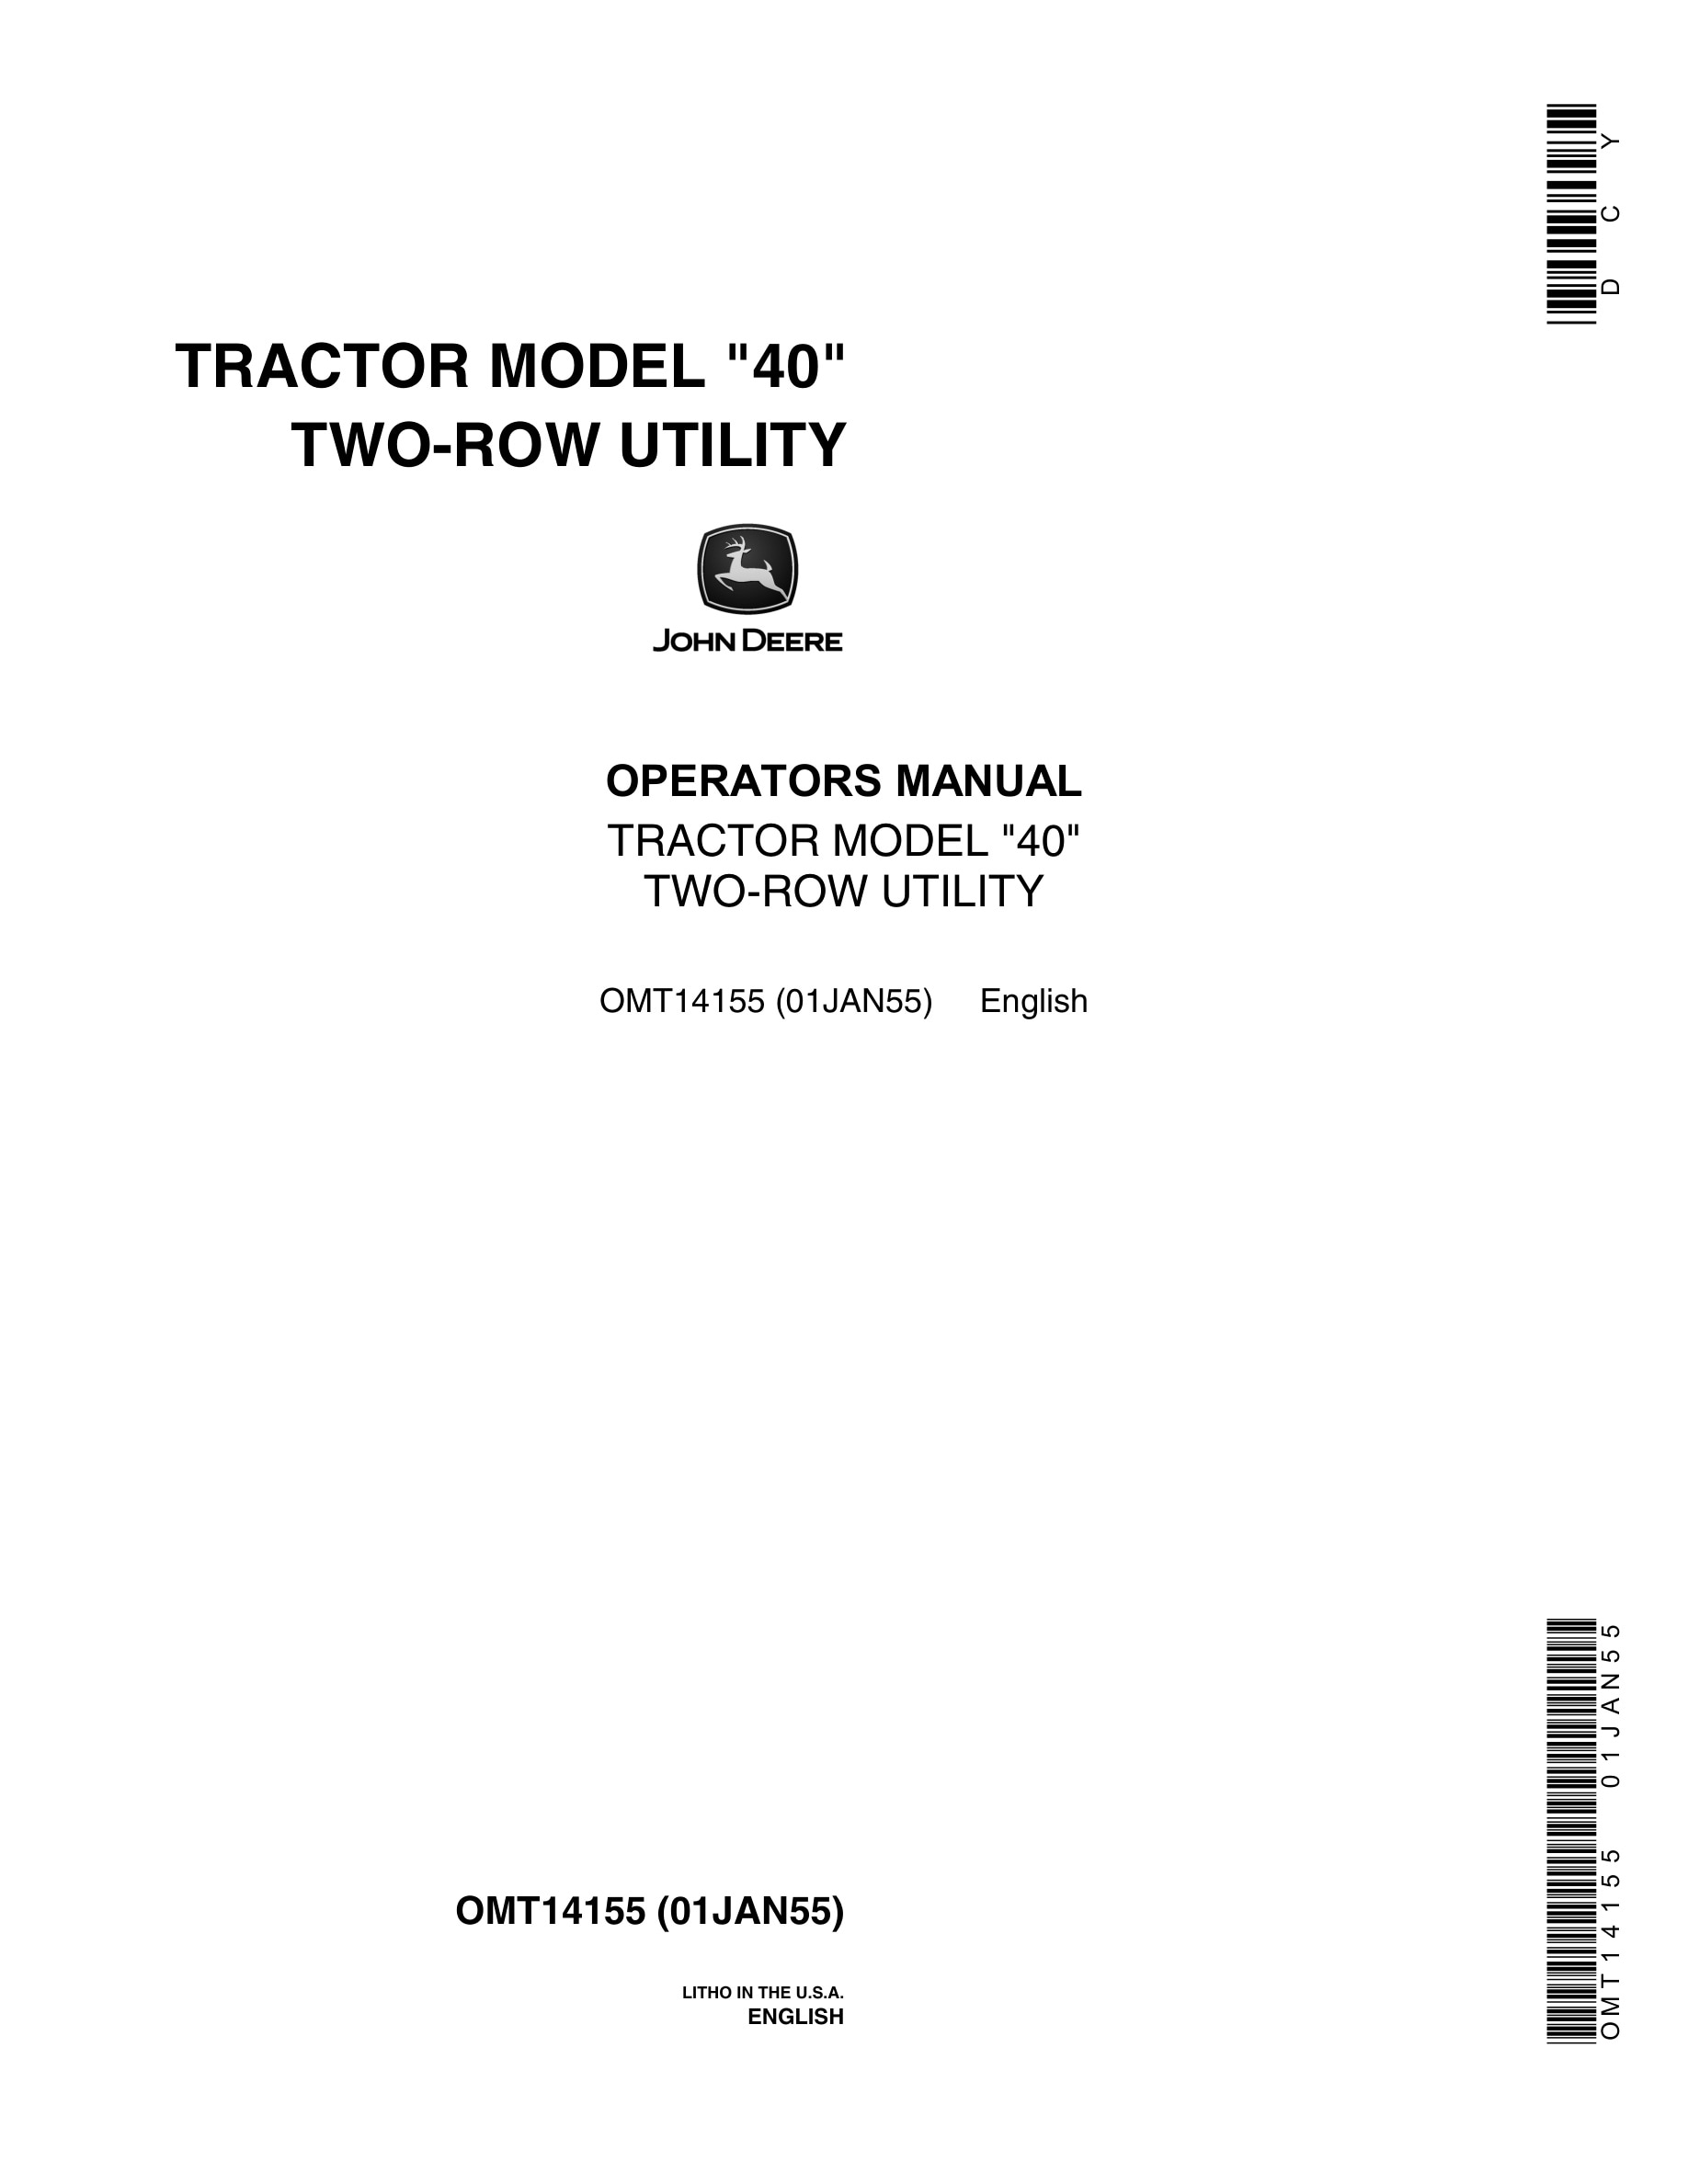 John Deere Two-row Utility 40 Tractor Operator Manual OMT1415-1